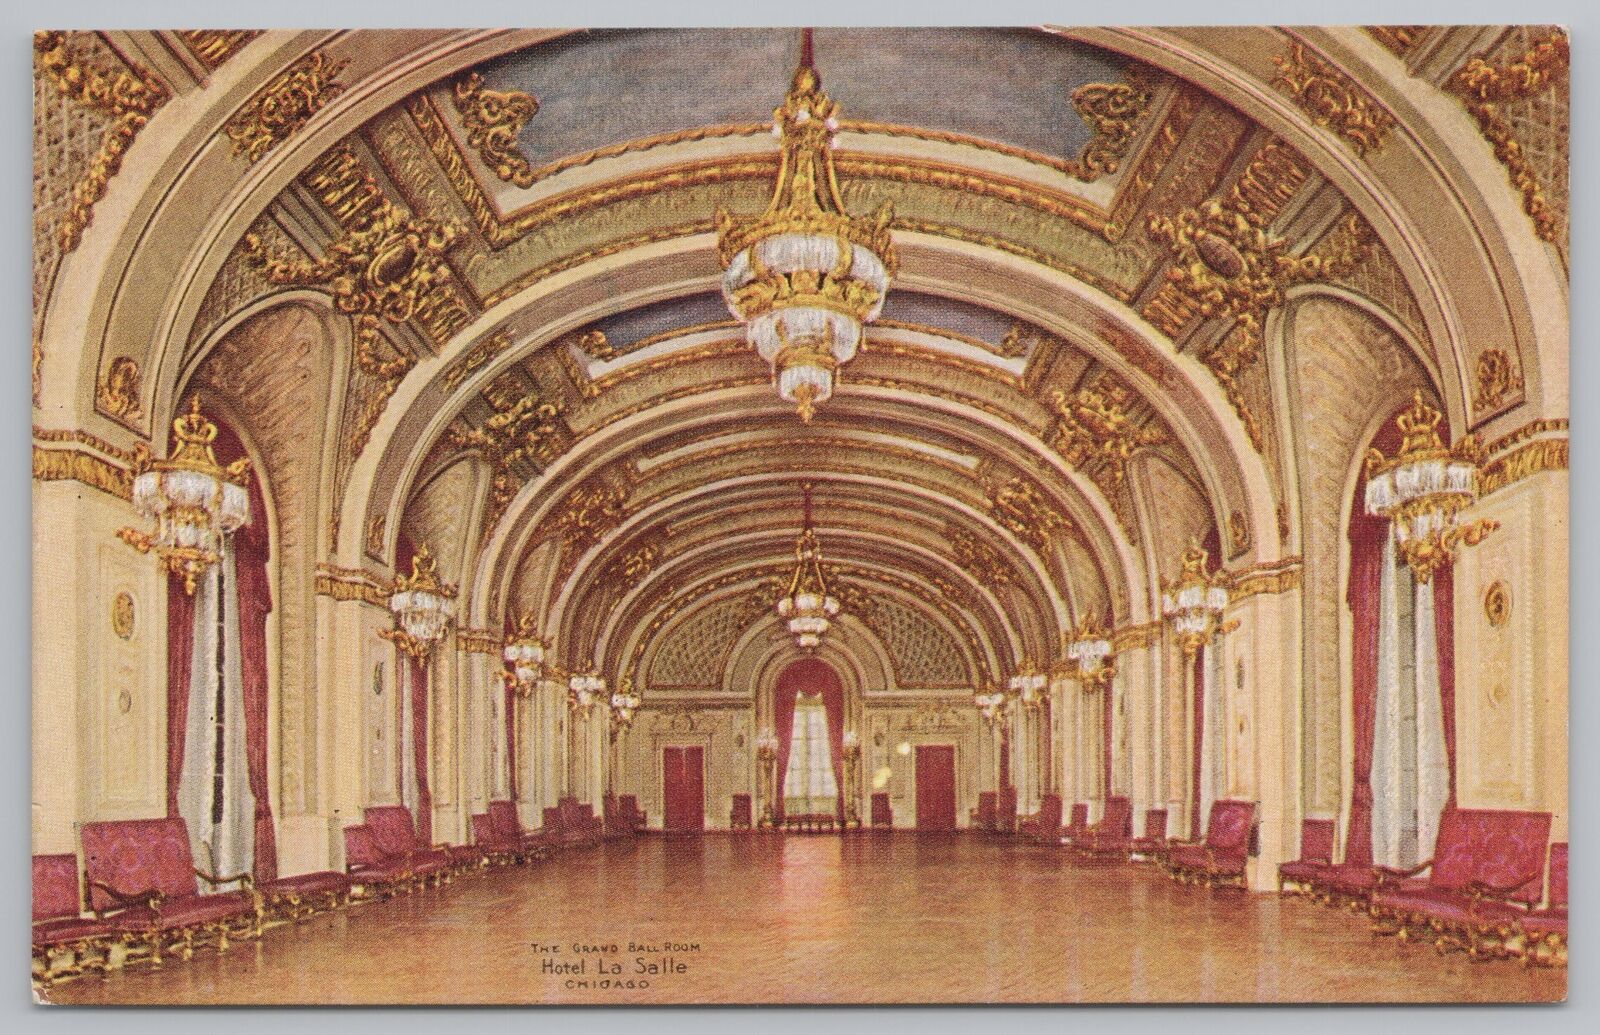 Grand Ballroom Of Hotel La Salle~A Stunning Gold Interior View~Vintage Postcard